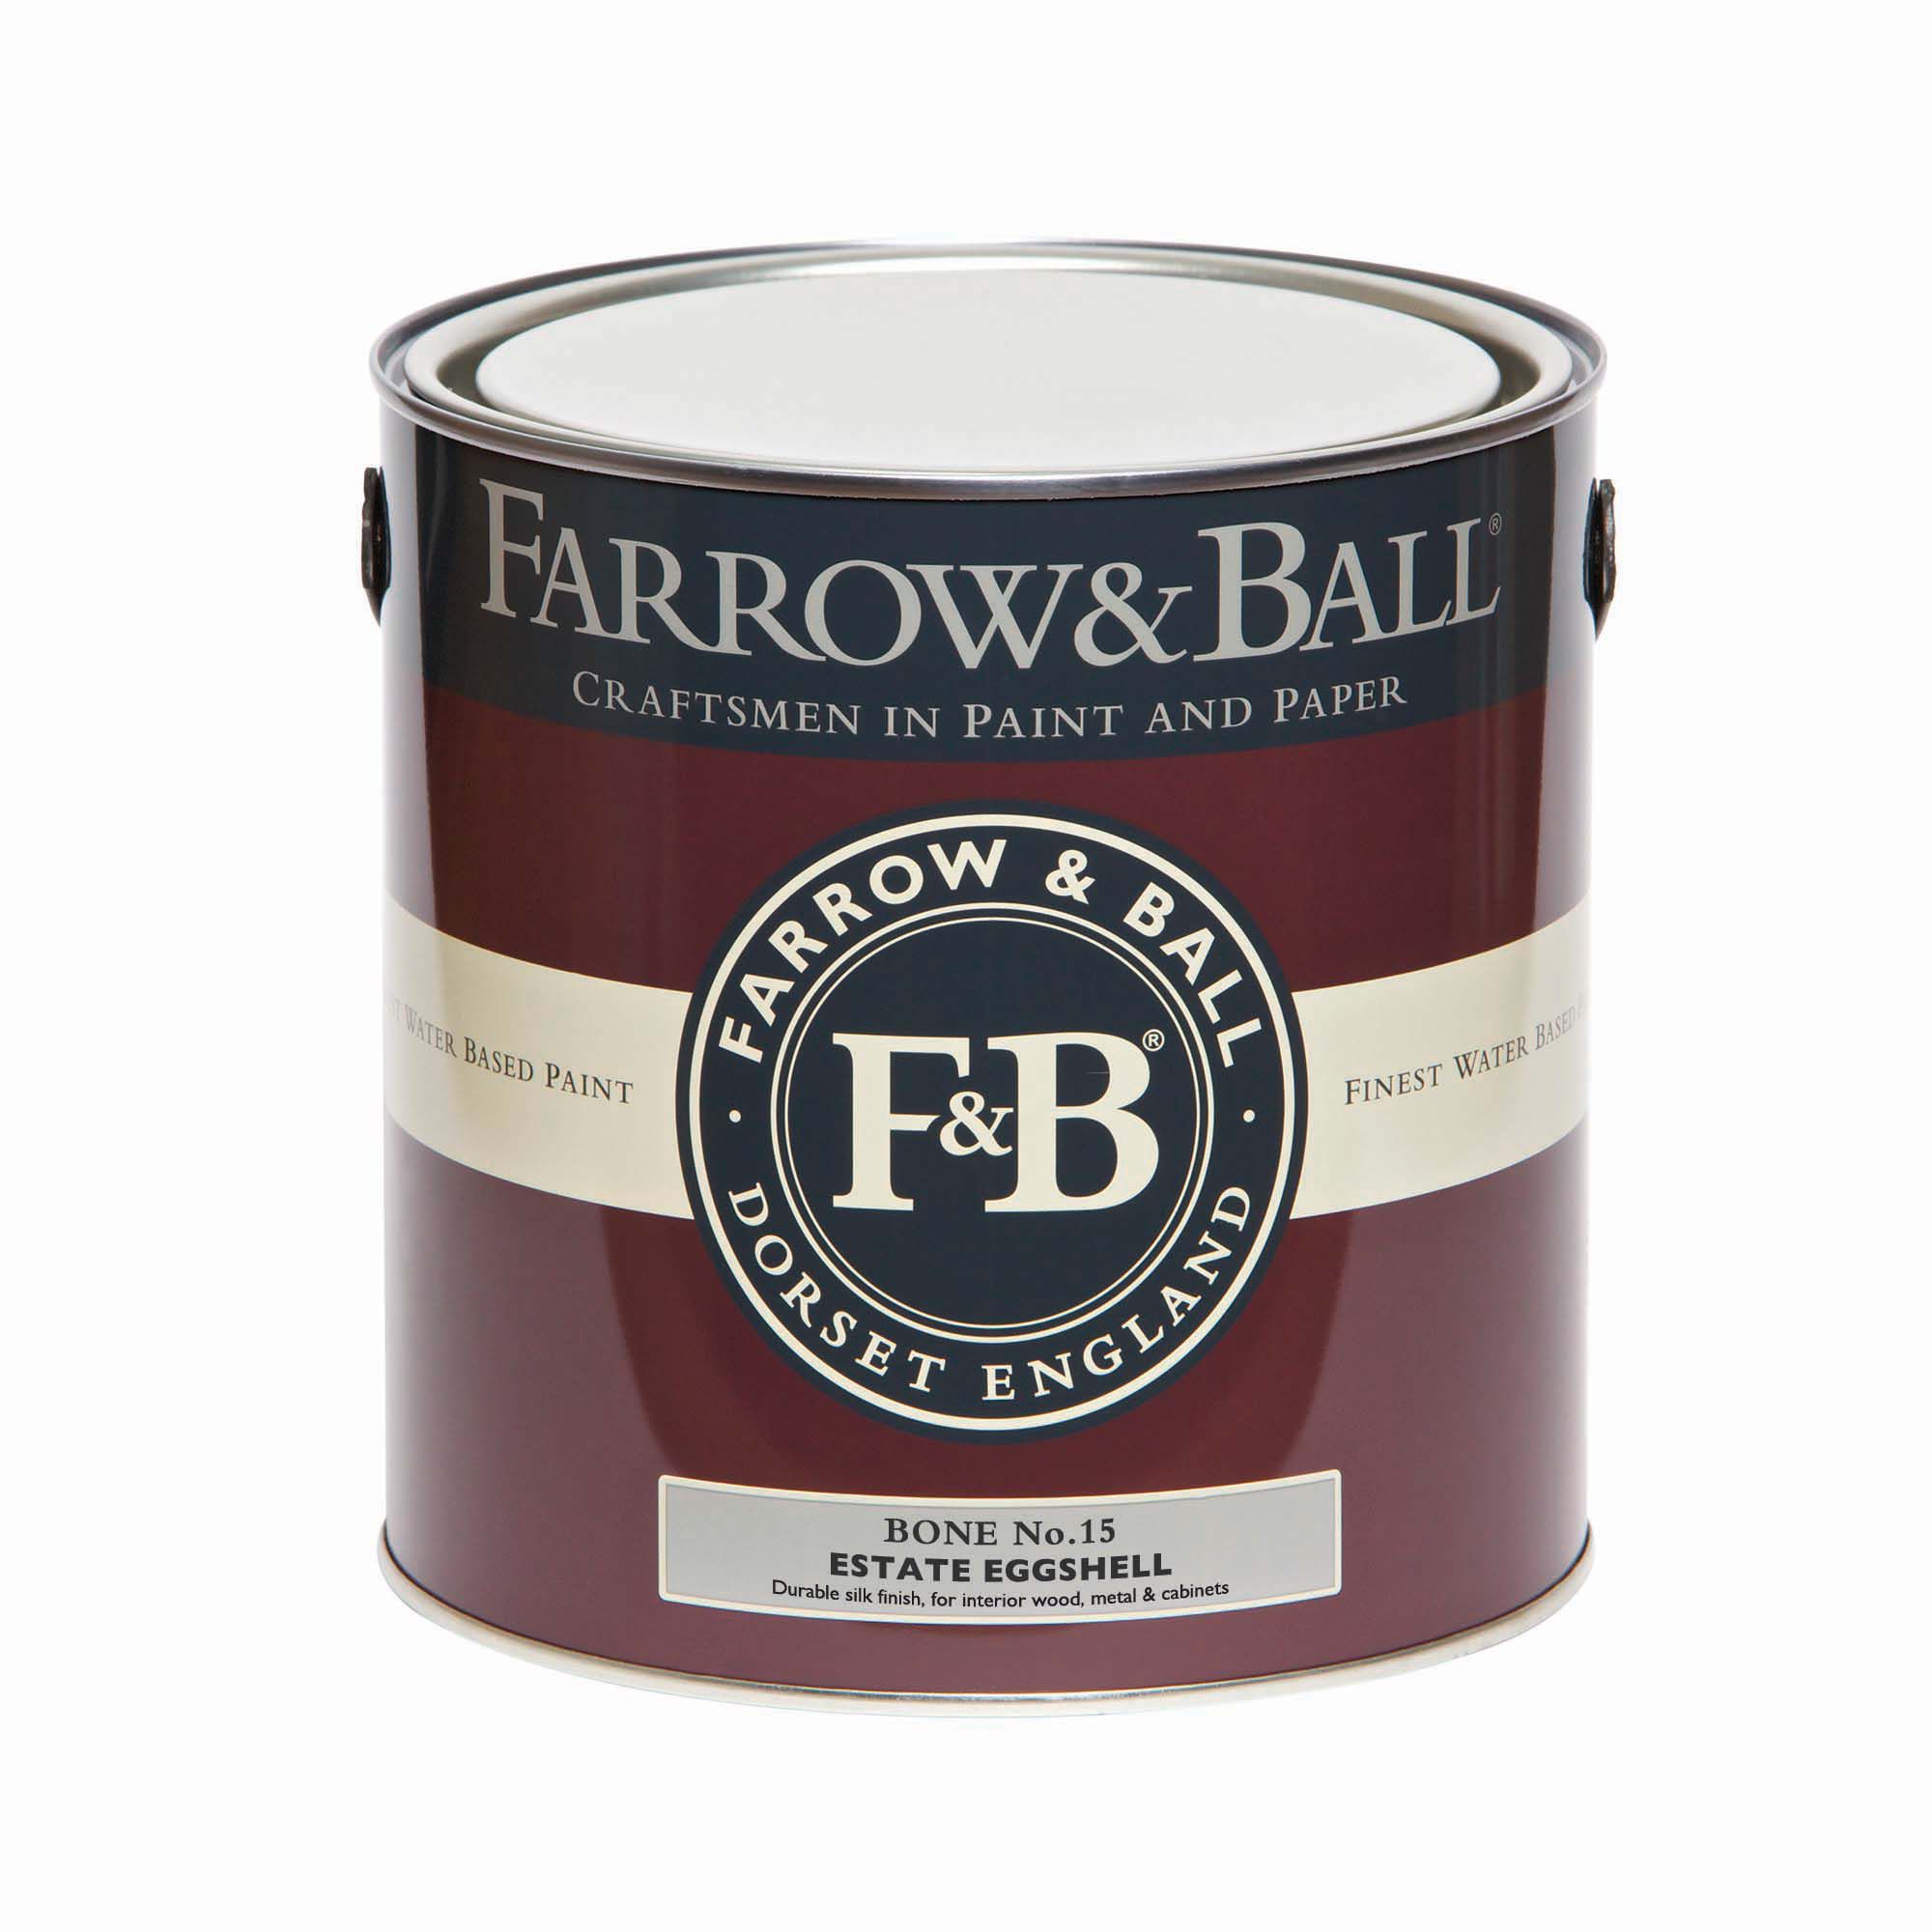 Farrow & Ball Estate Bone No.15 Eggshell Paint, 2.5L